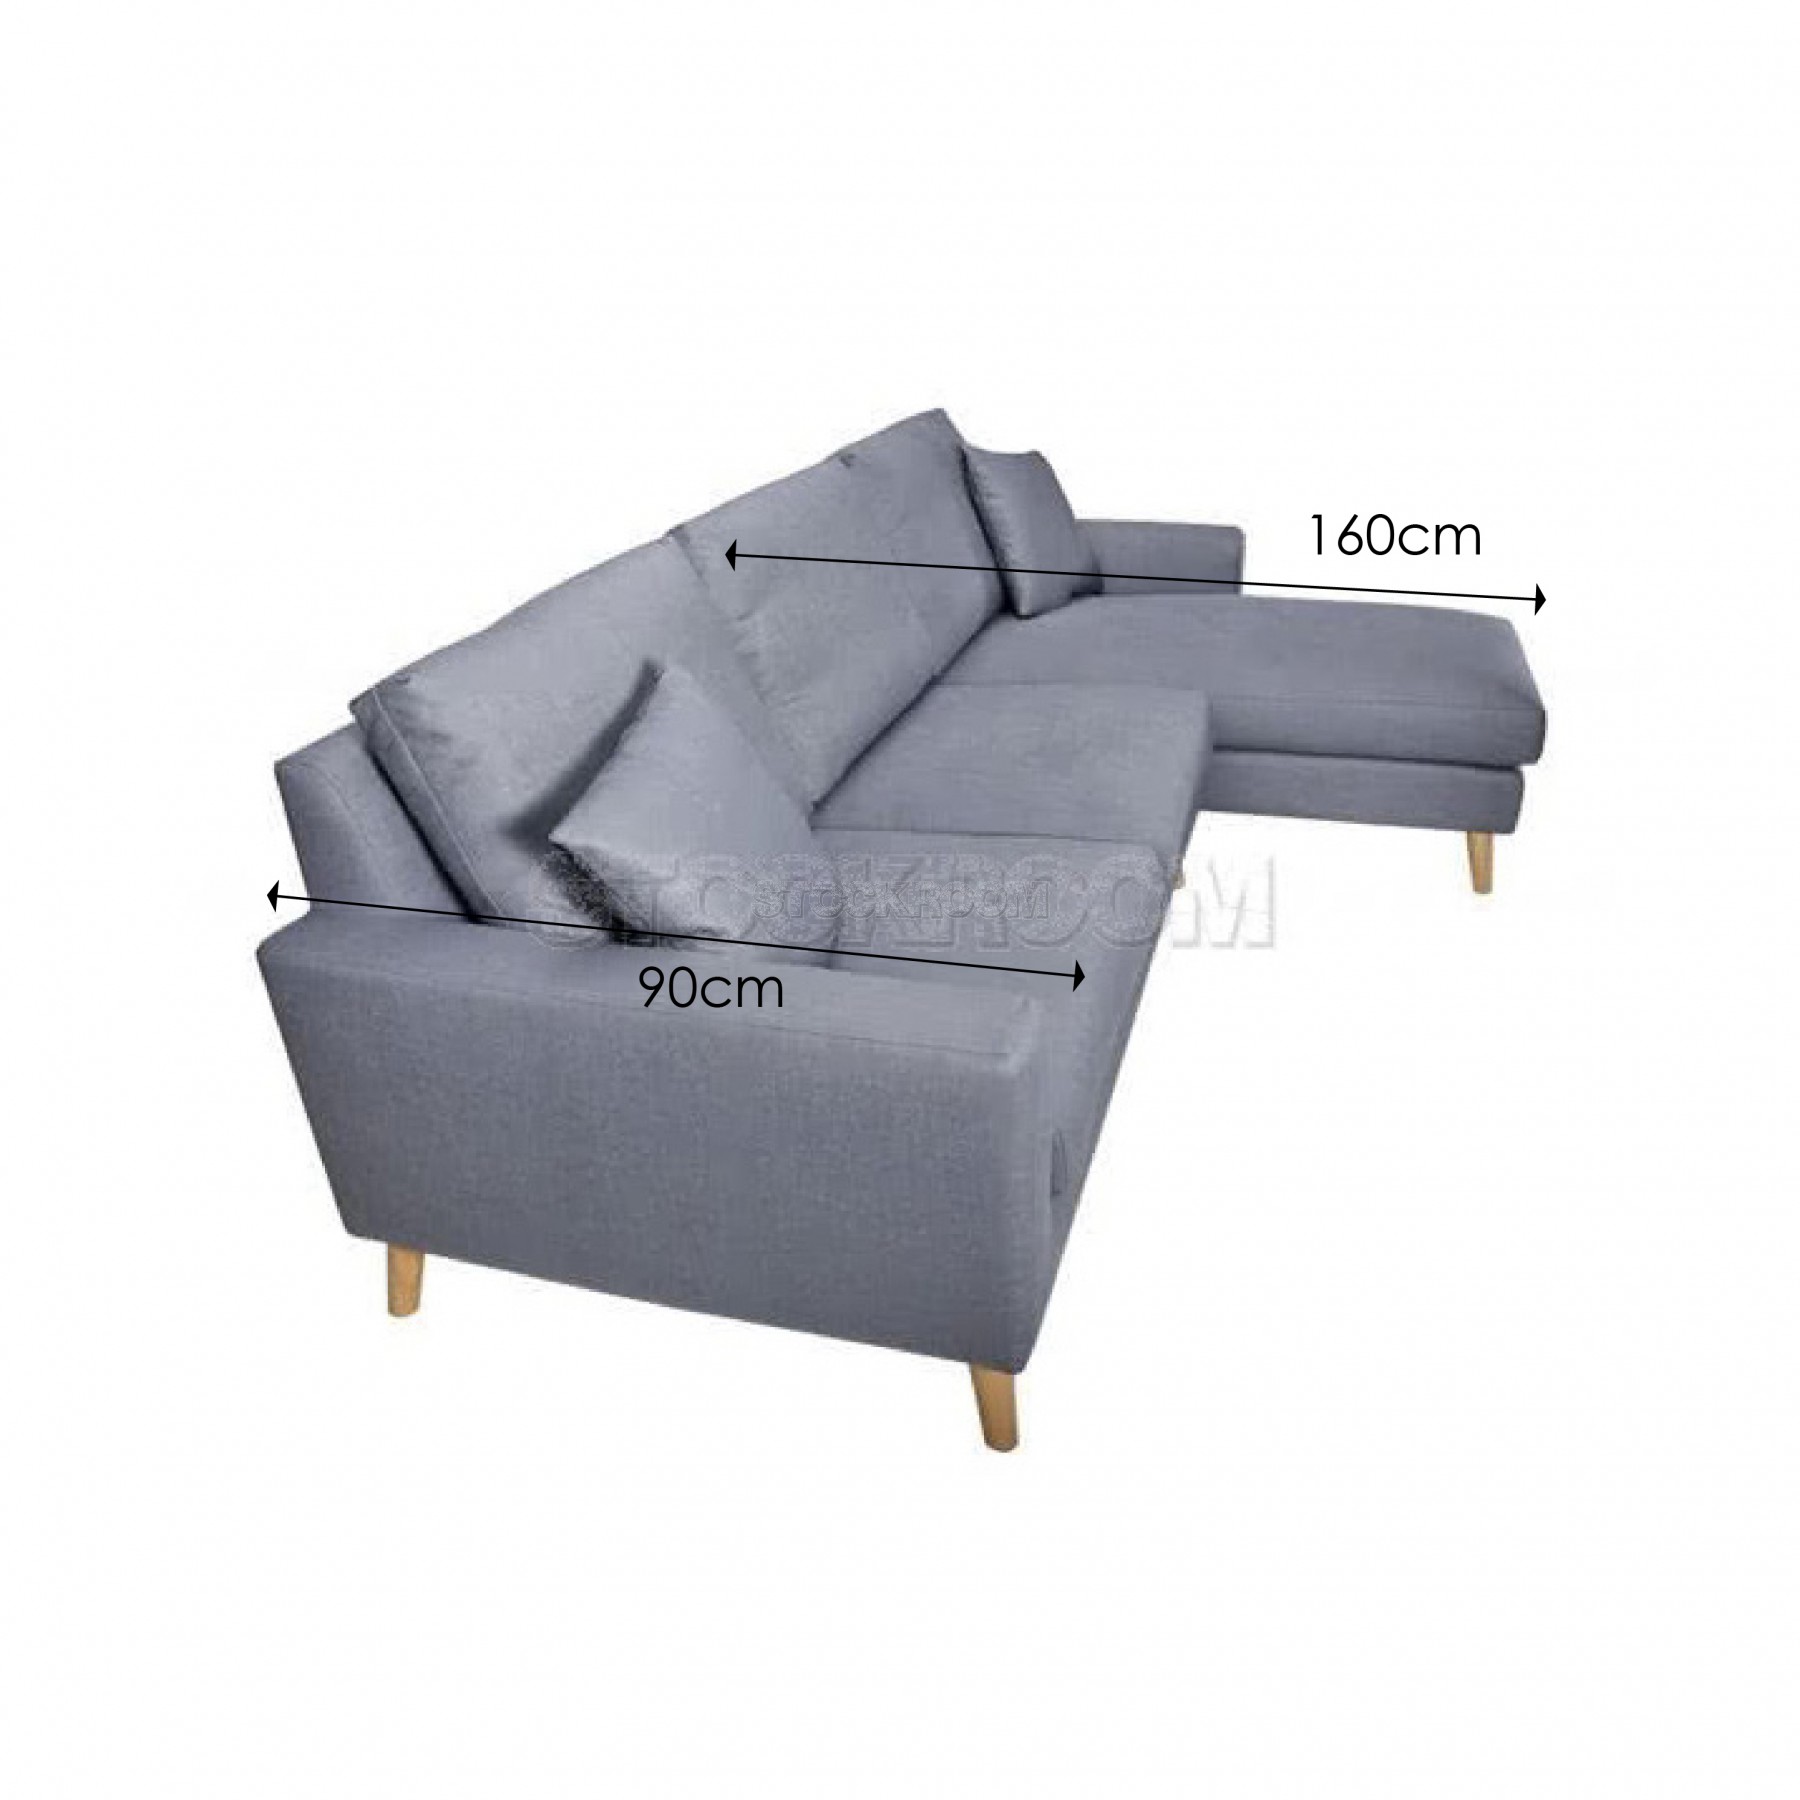 Ashby Fabric Sofa - L Shape